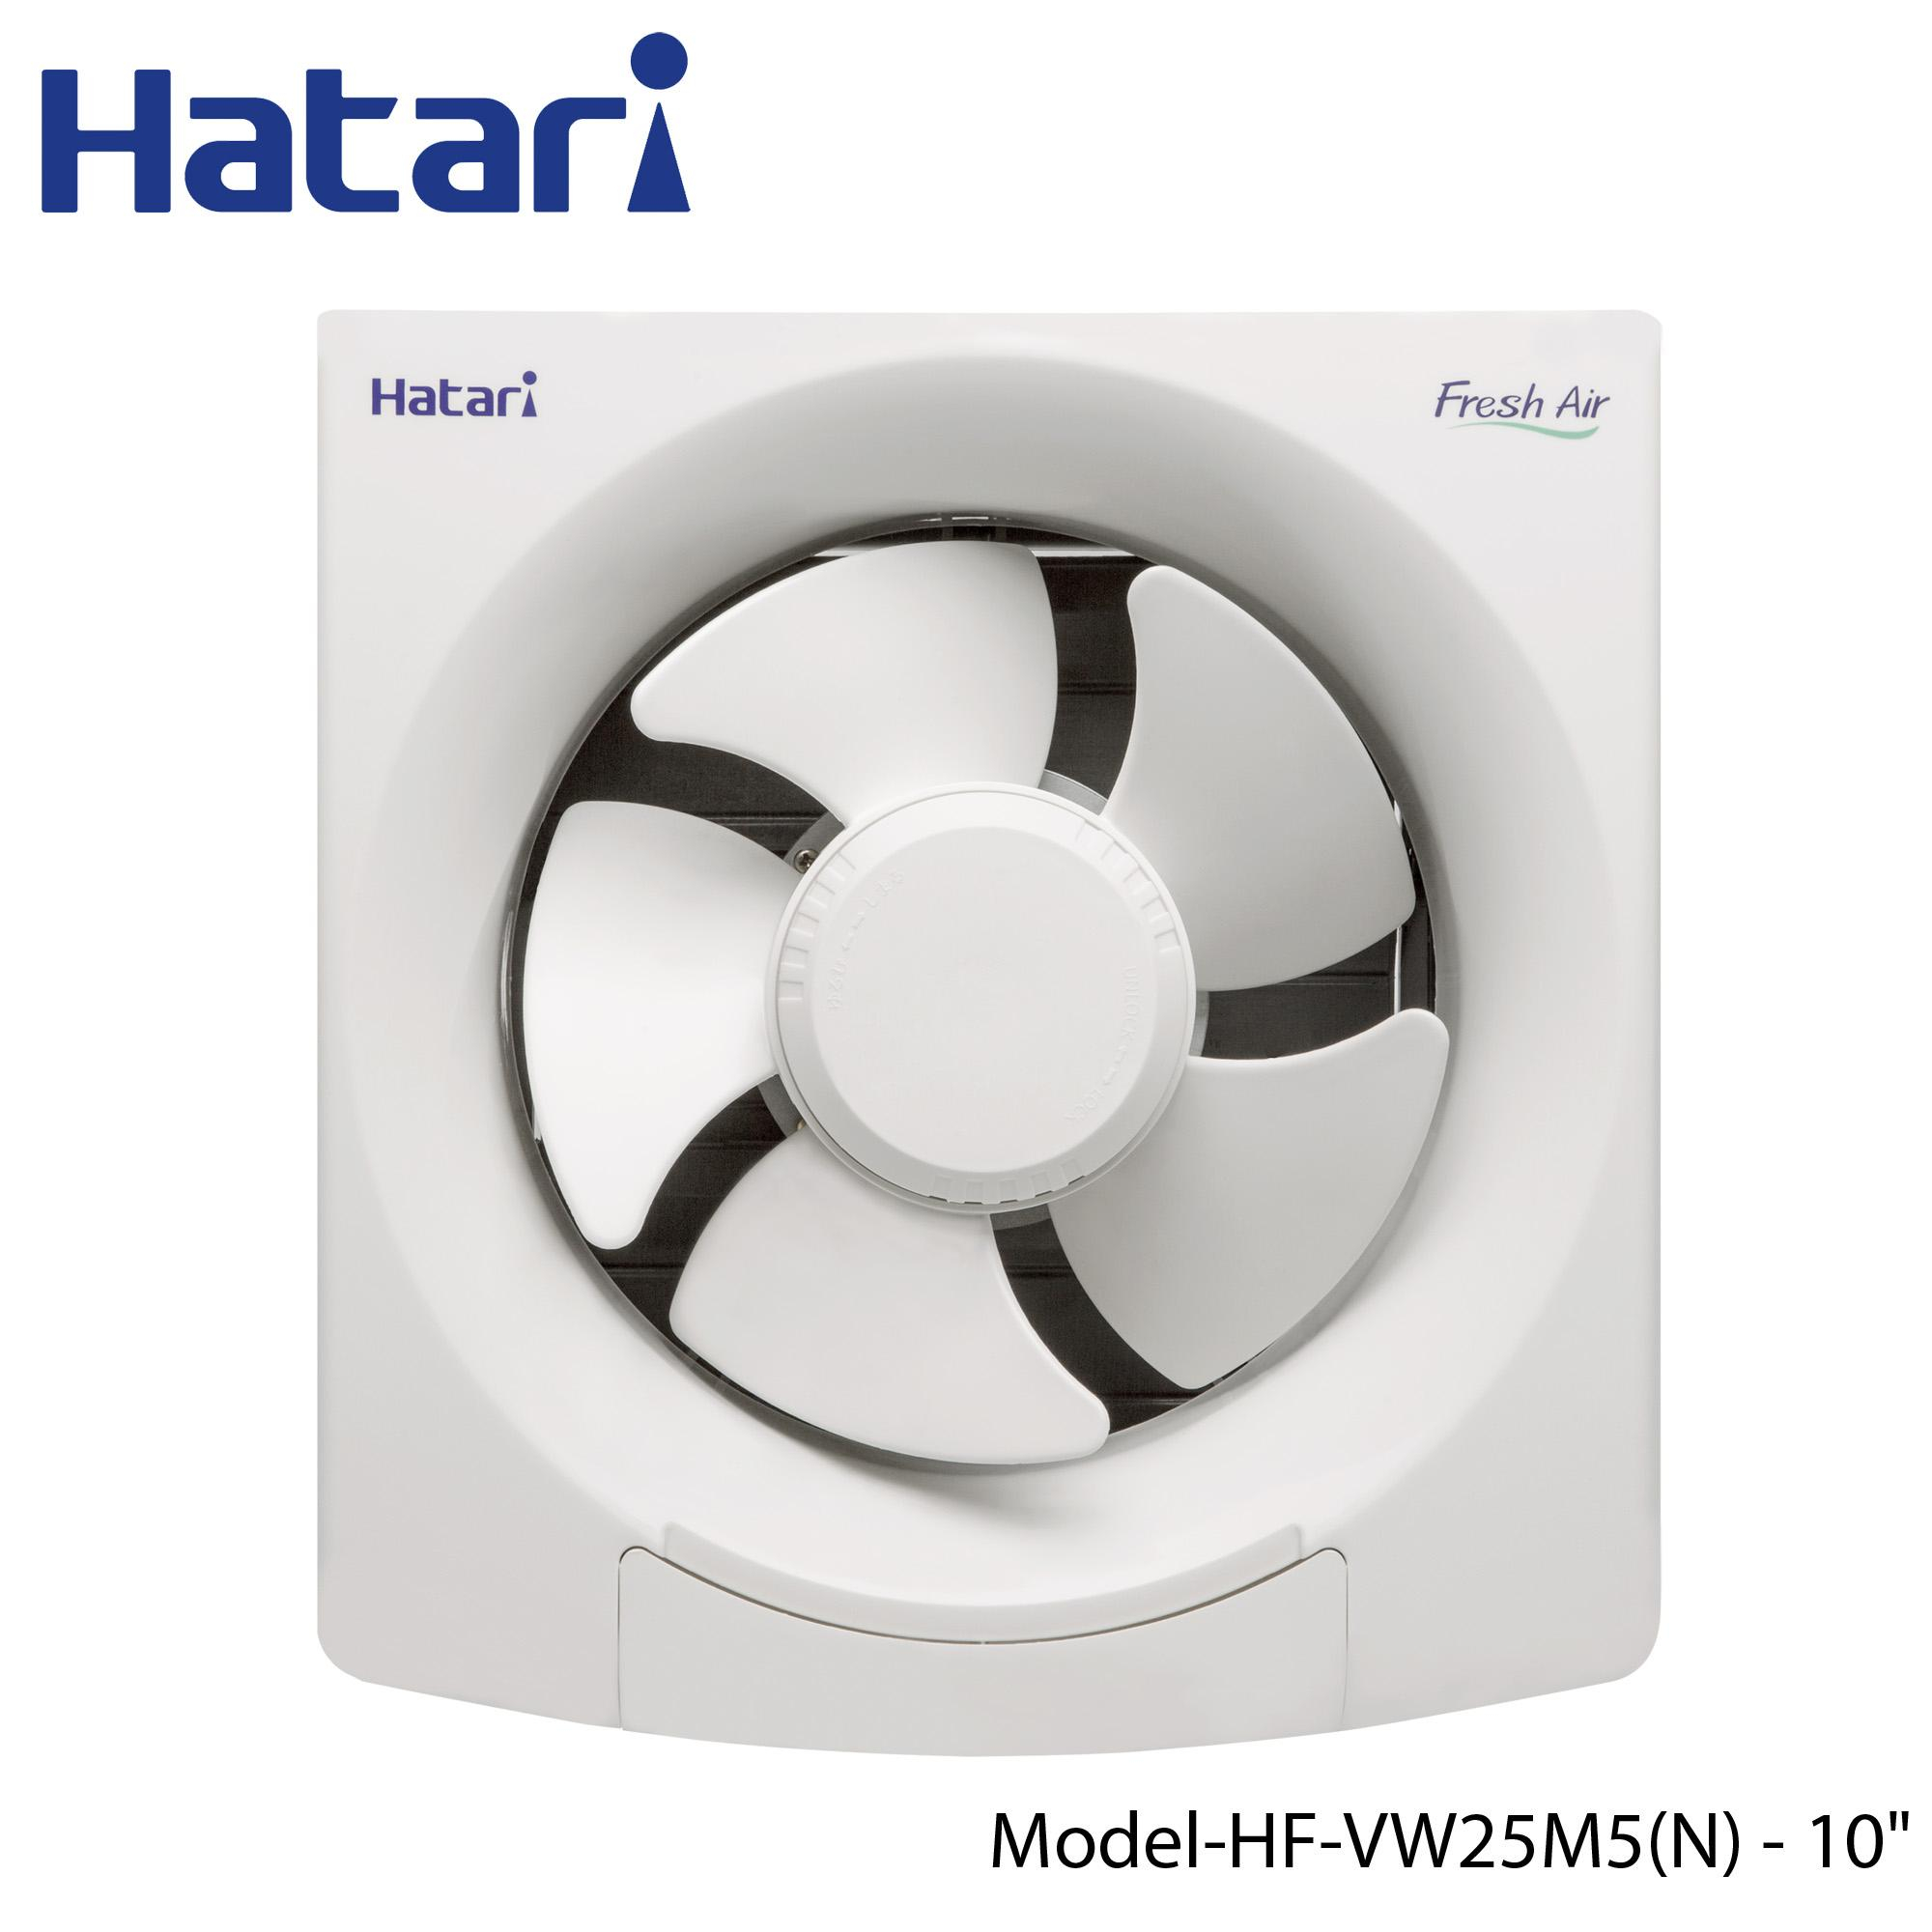 Hatari Ventilation Fan 10 Hf Vw25m5n within size 2000 X 2000